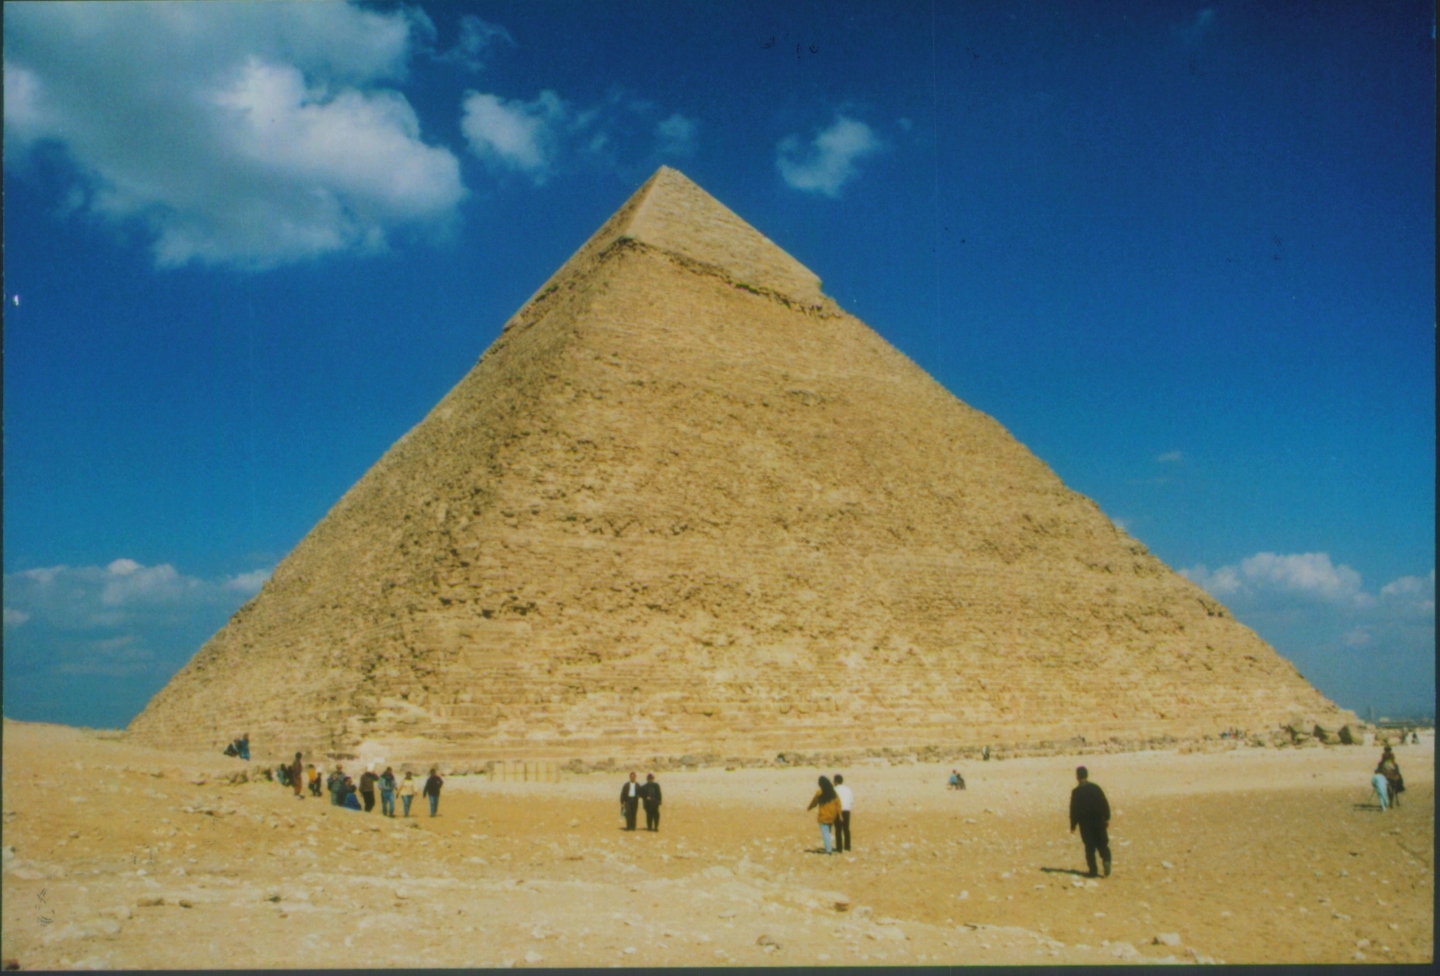 Chephren Pyramids of Egypt 1998